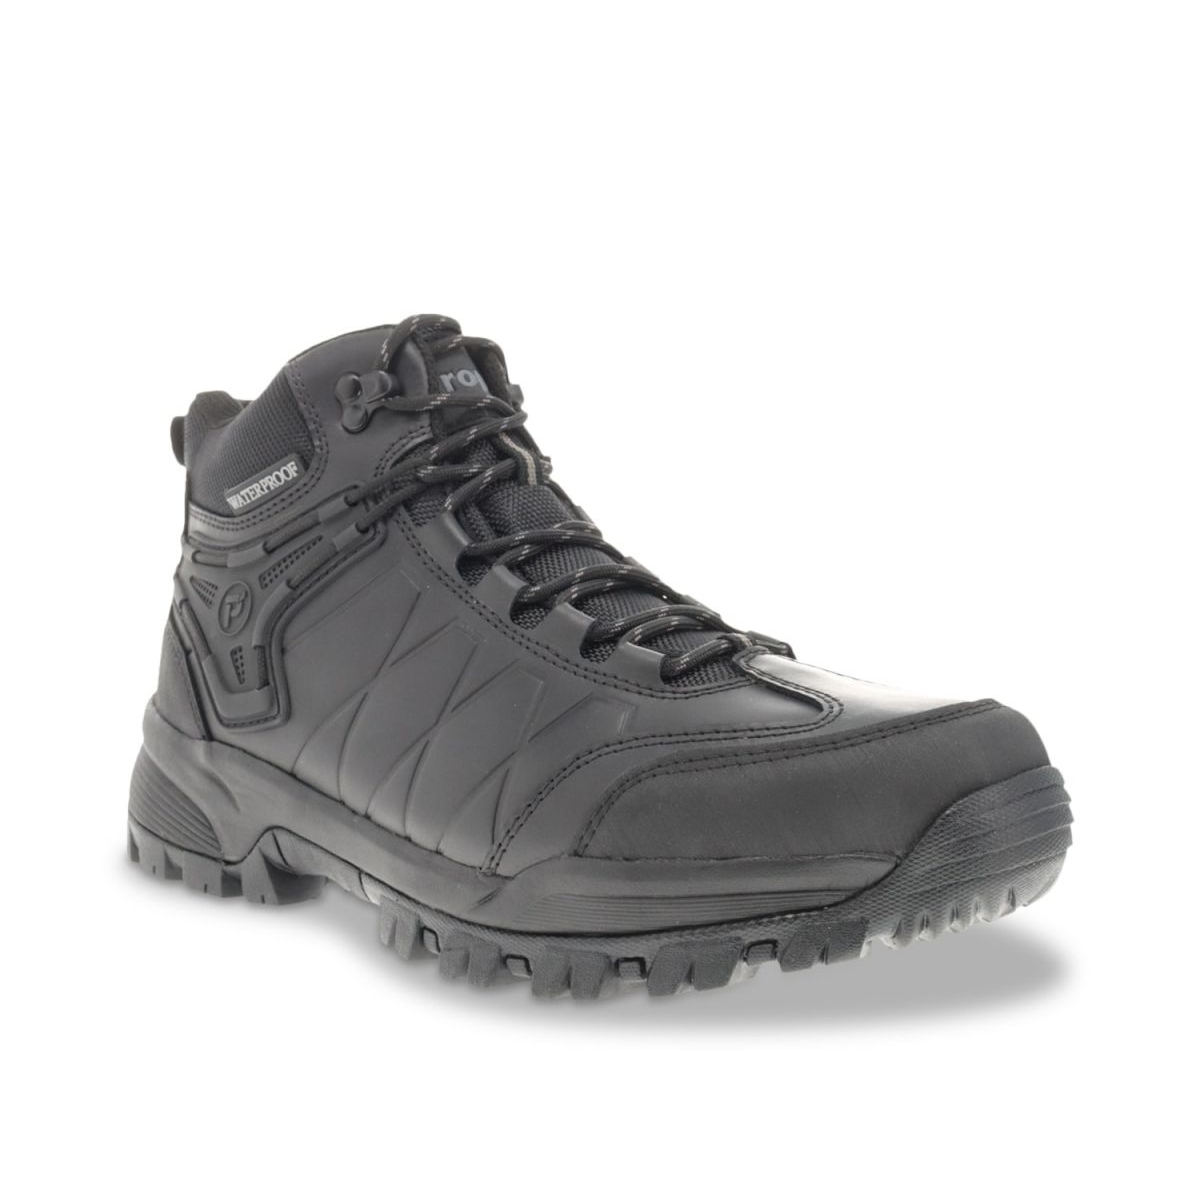 Propet Men's Ridge Walker Force Hiking Boots Black - MBA052LBLK BLACK - BLACK, 9 X-Wide